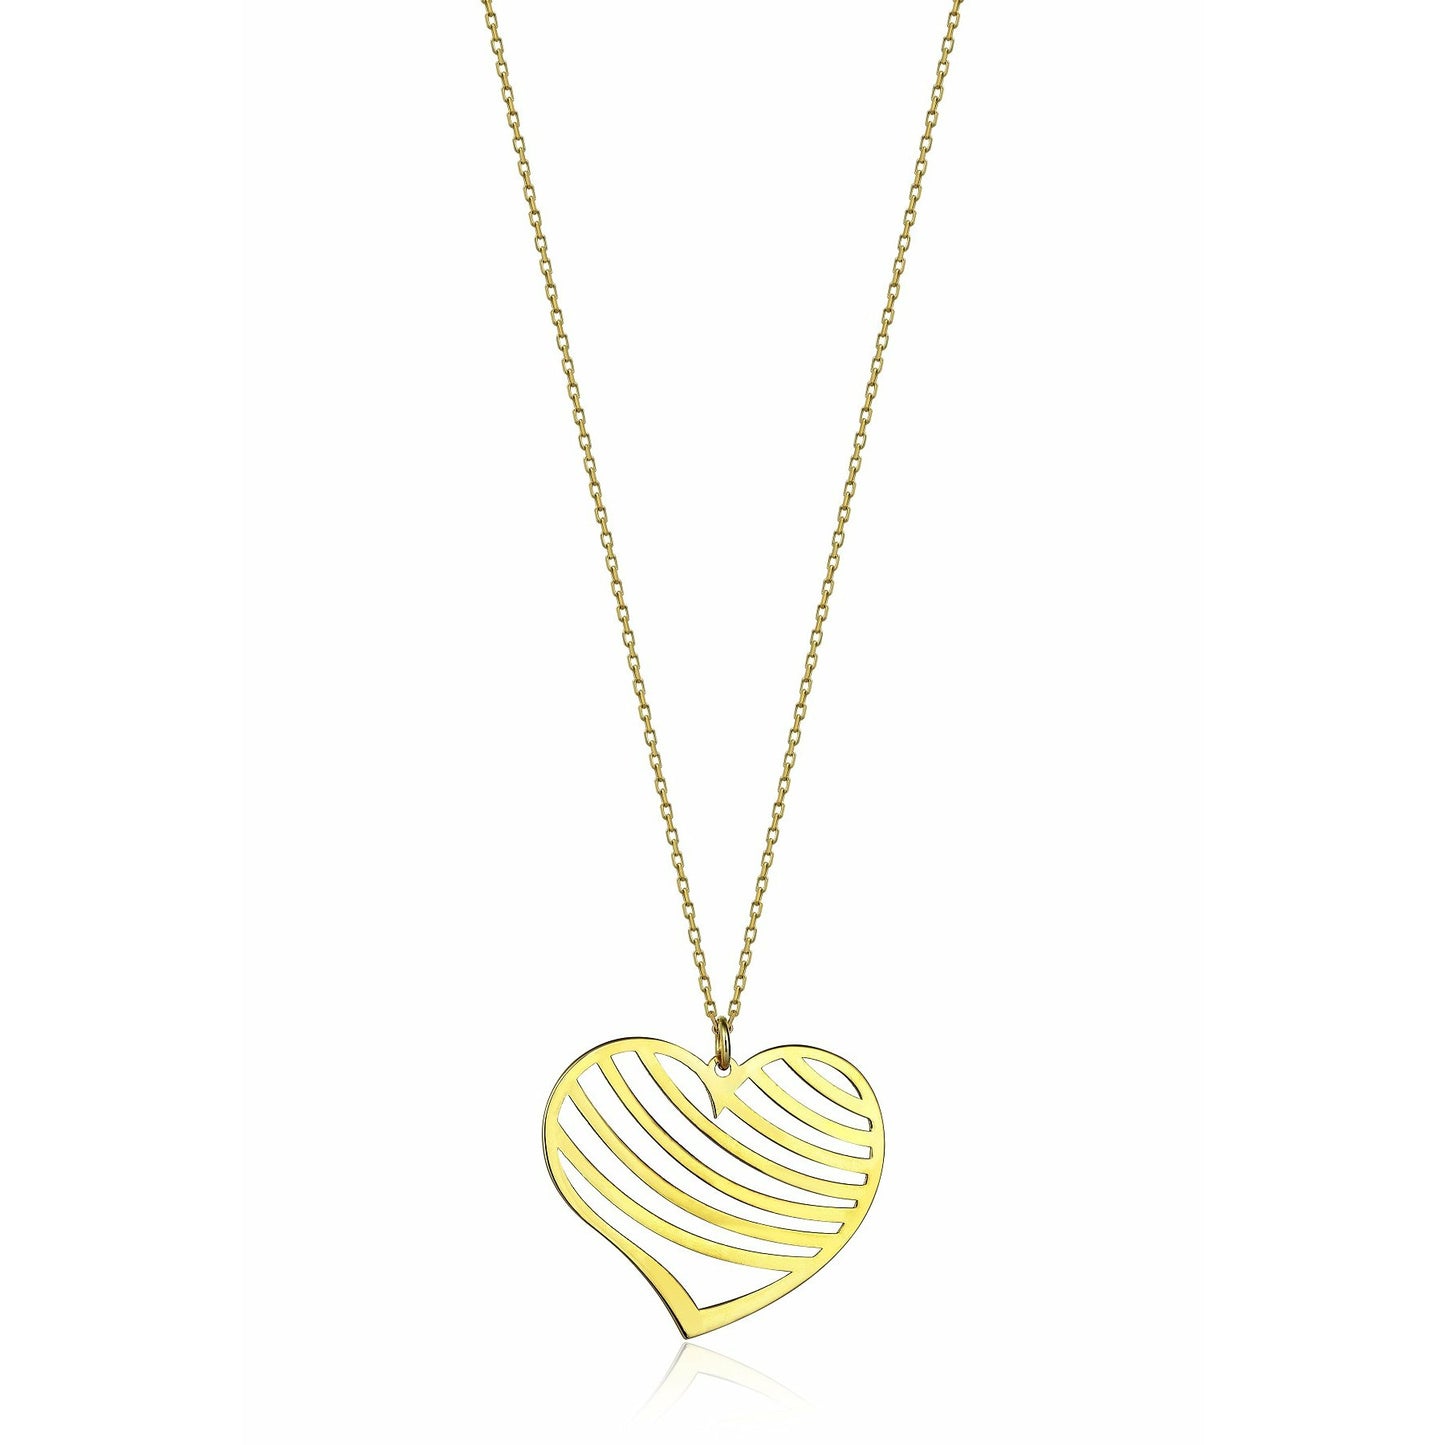 Special Design Gift 14k Gold Patterned Heart Necklace 